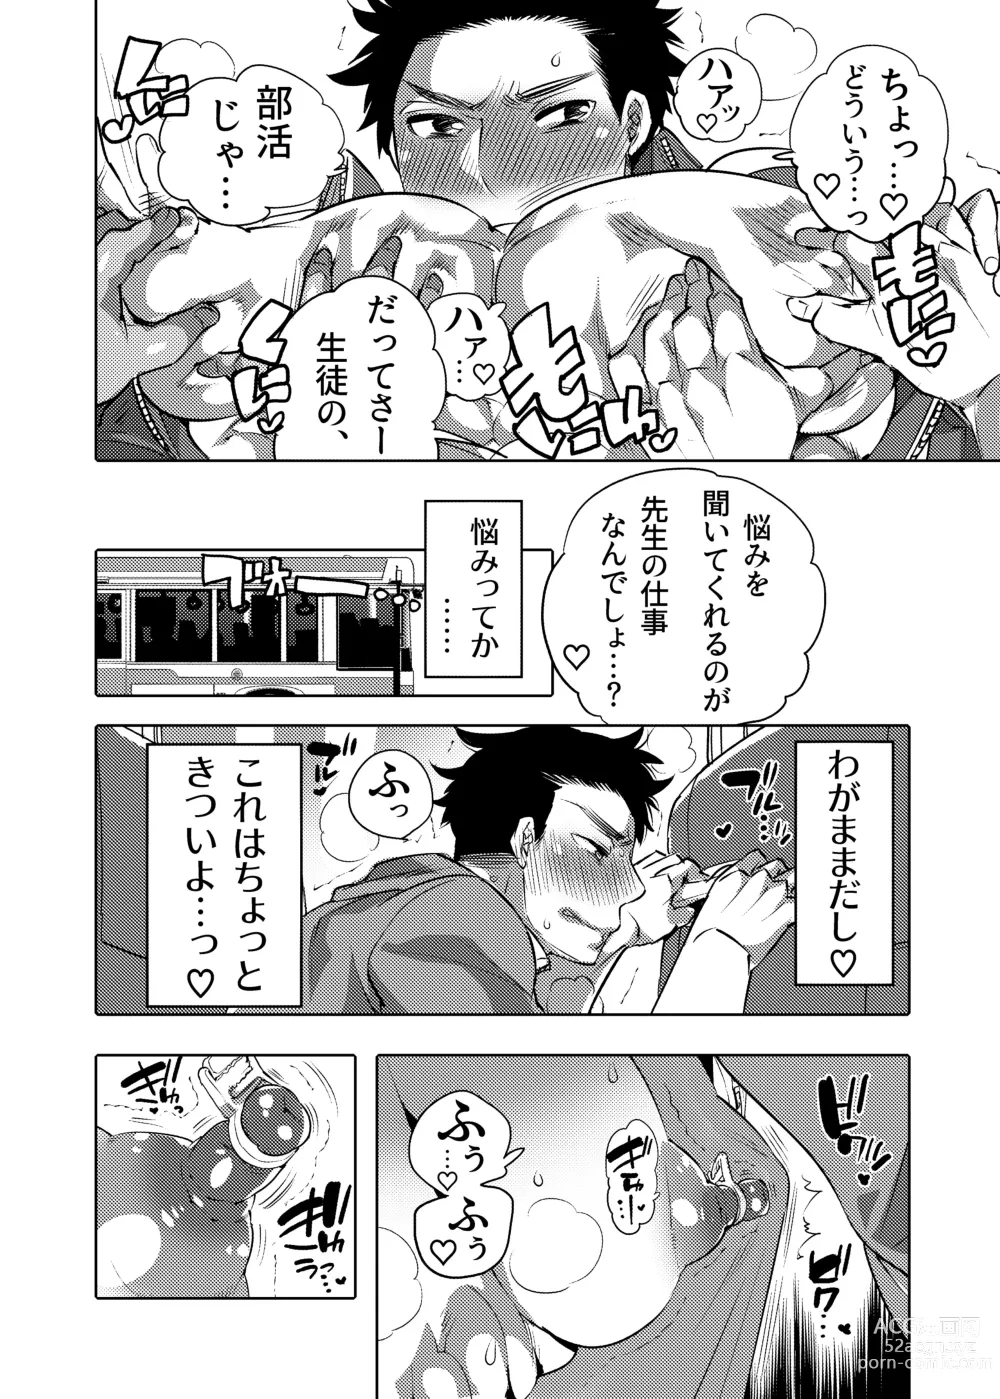 Page 4 of doujinshi Choropai Sensei to Iinari Date